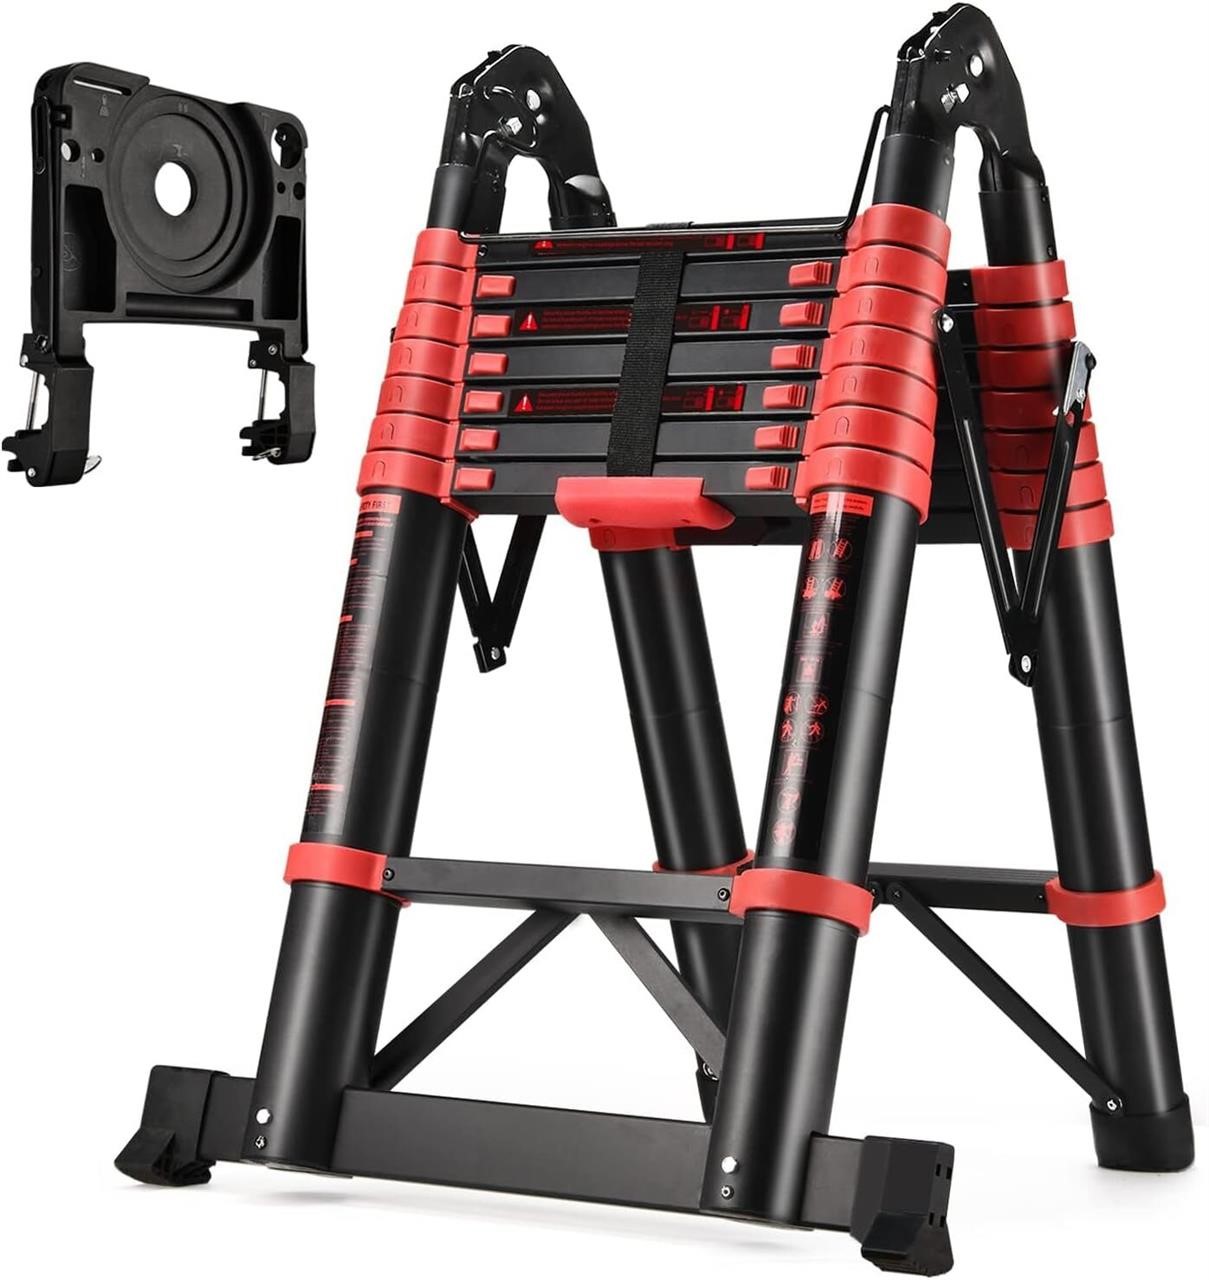 HBTower 16.5ft Telescopic Ladder  Red